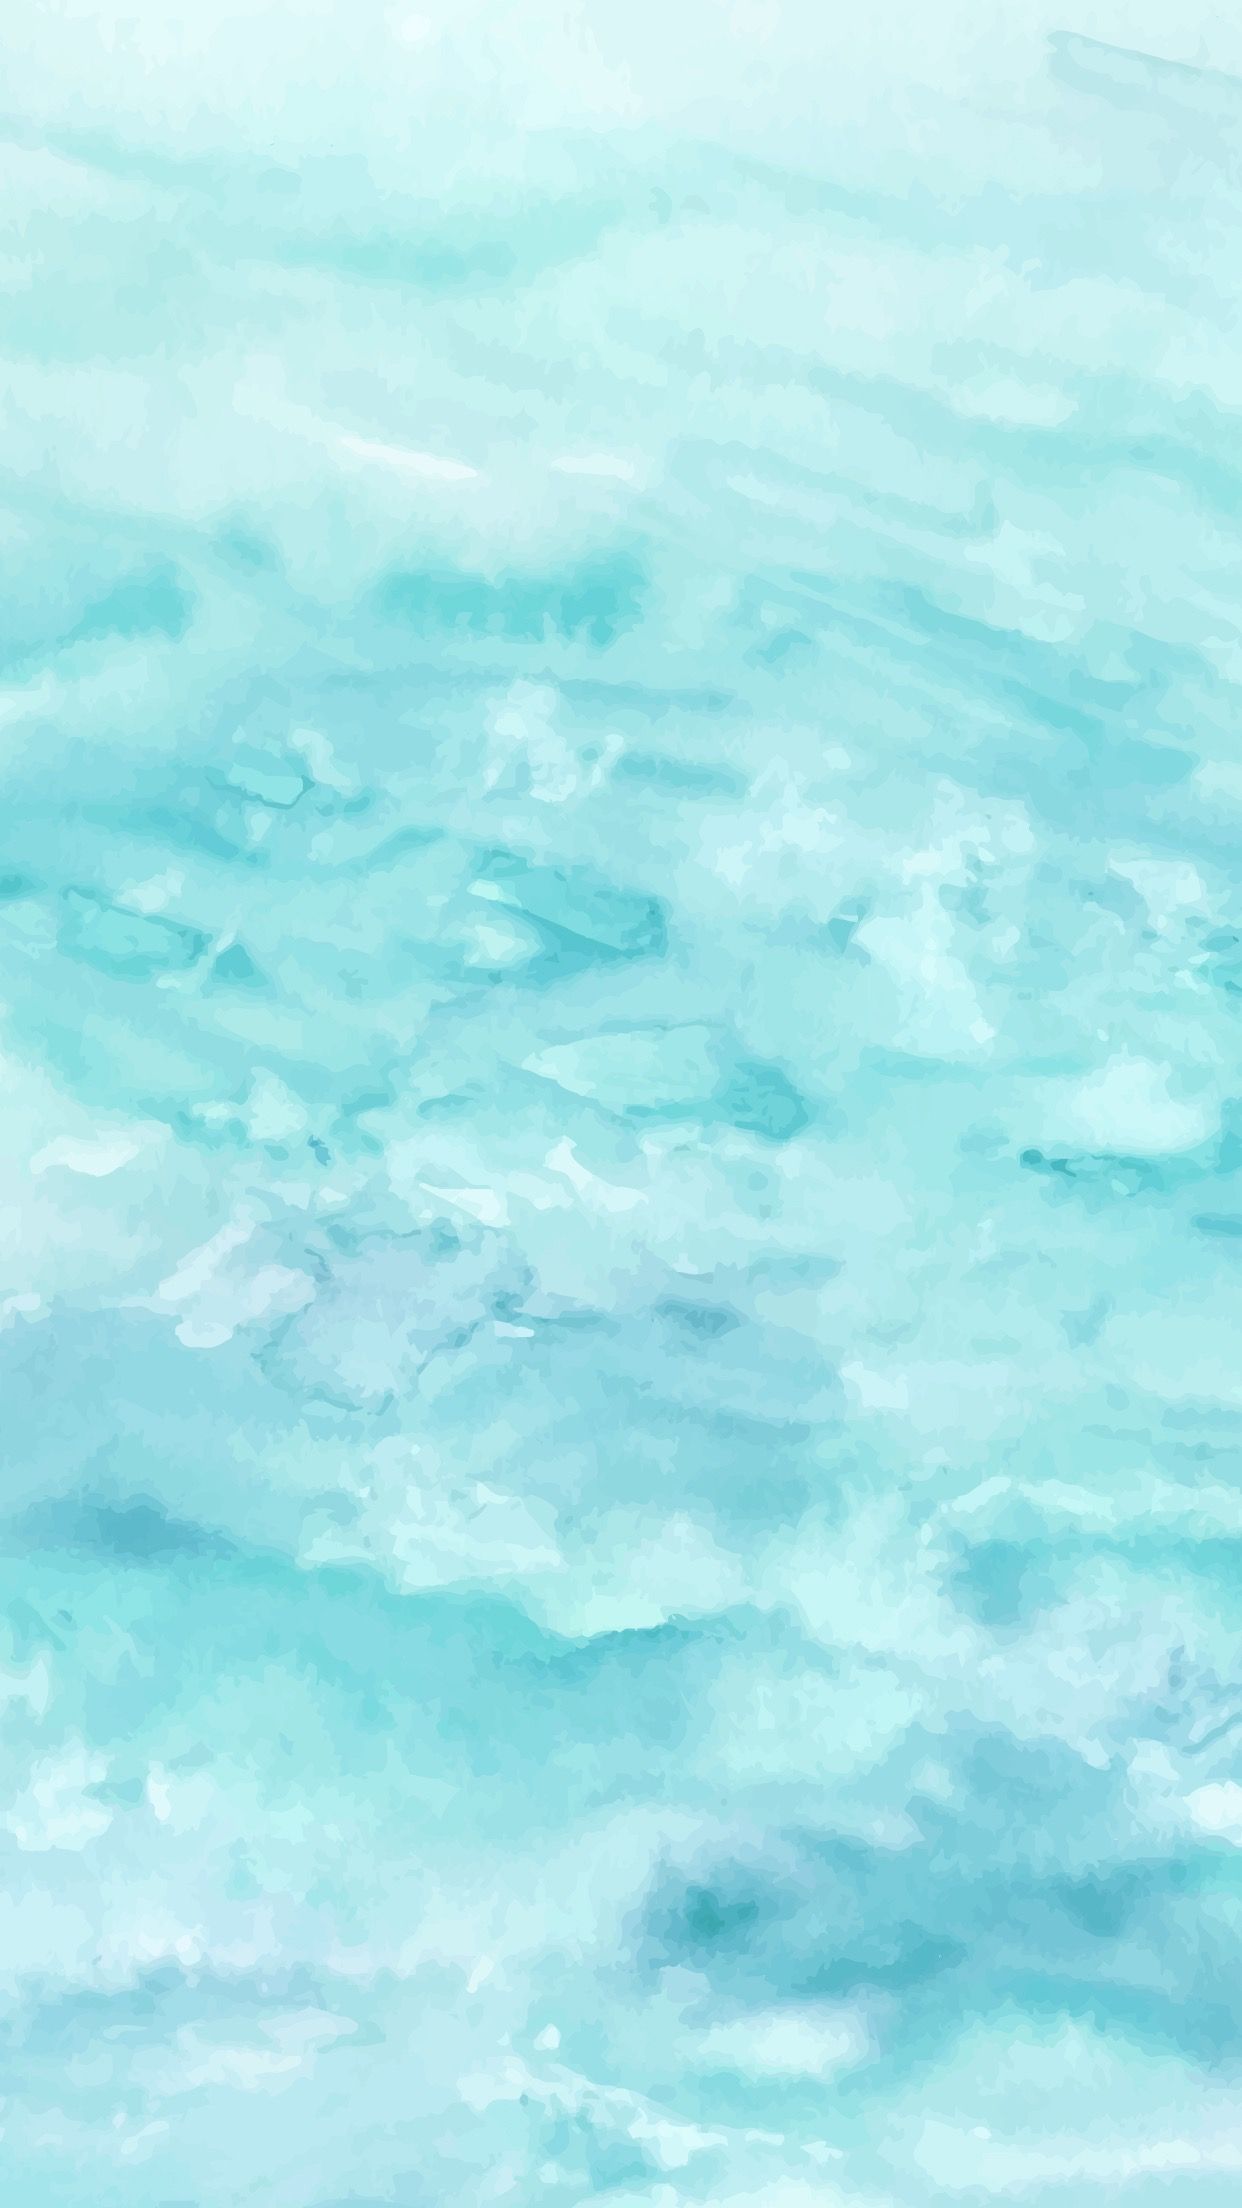 IPhone wallpaper blue watercolor abstract painting - Aqua